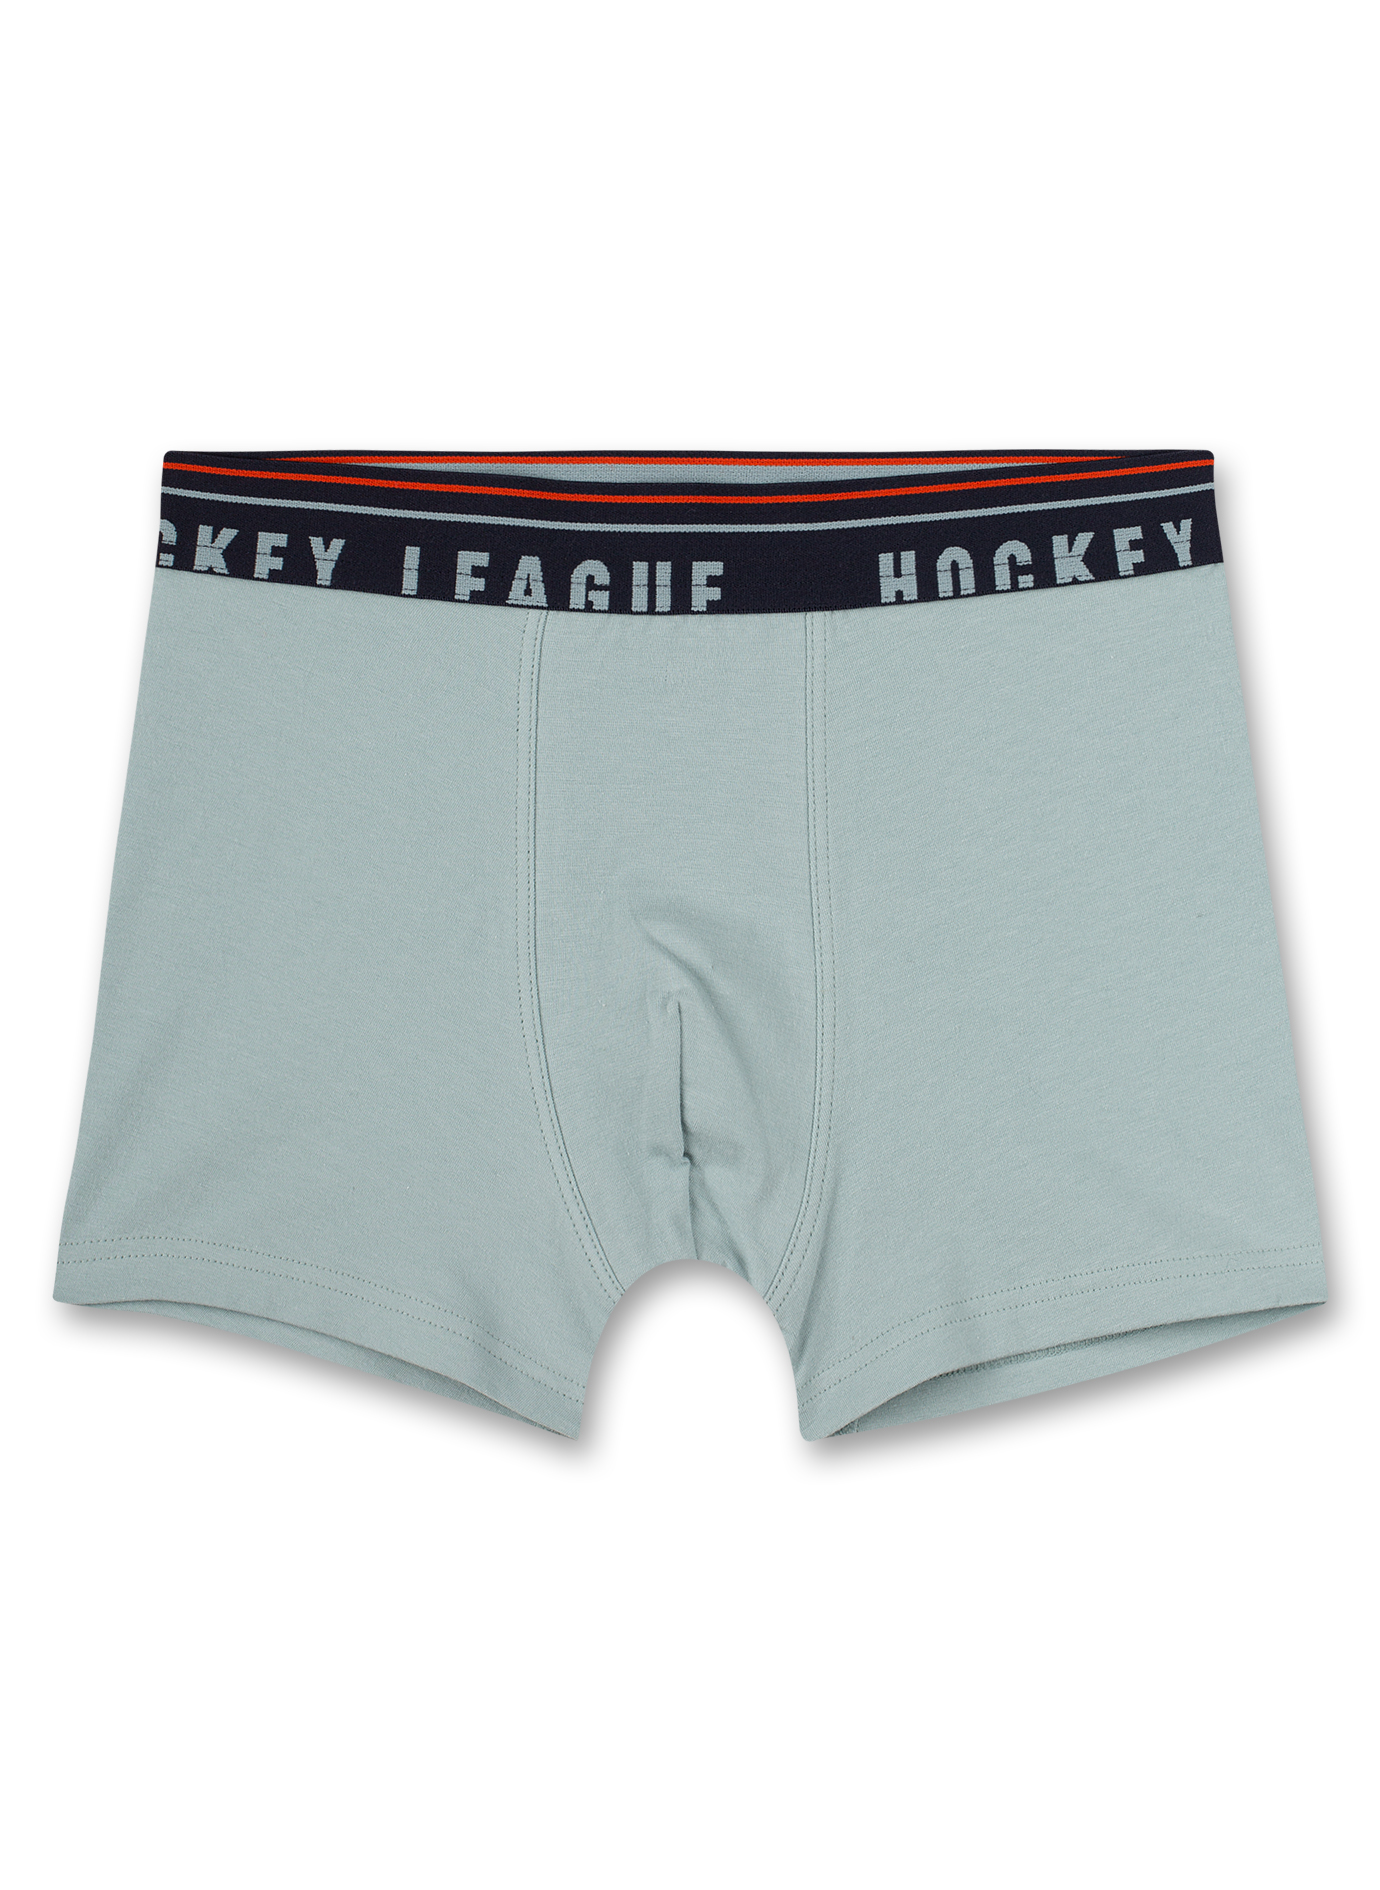 Jungen-Hipshorts (Doppelpack) Blau Hockey League